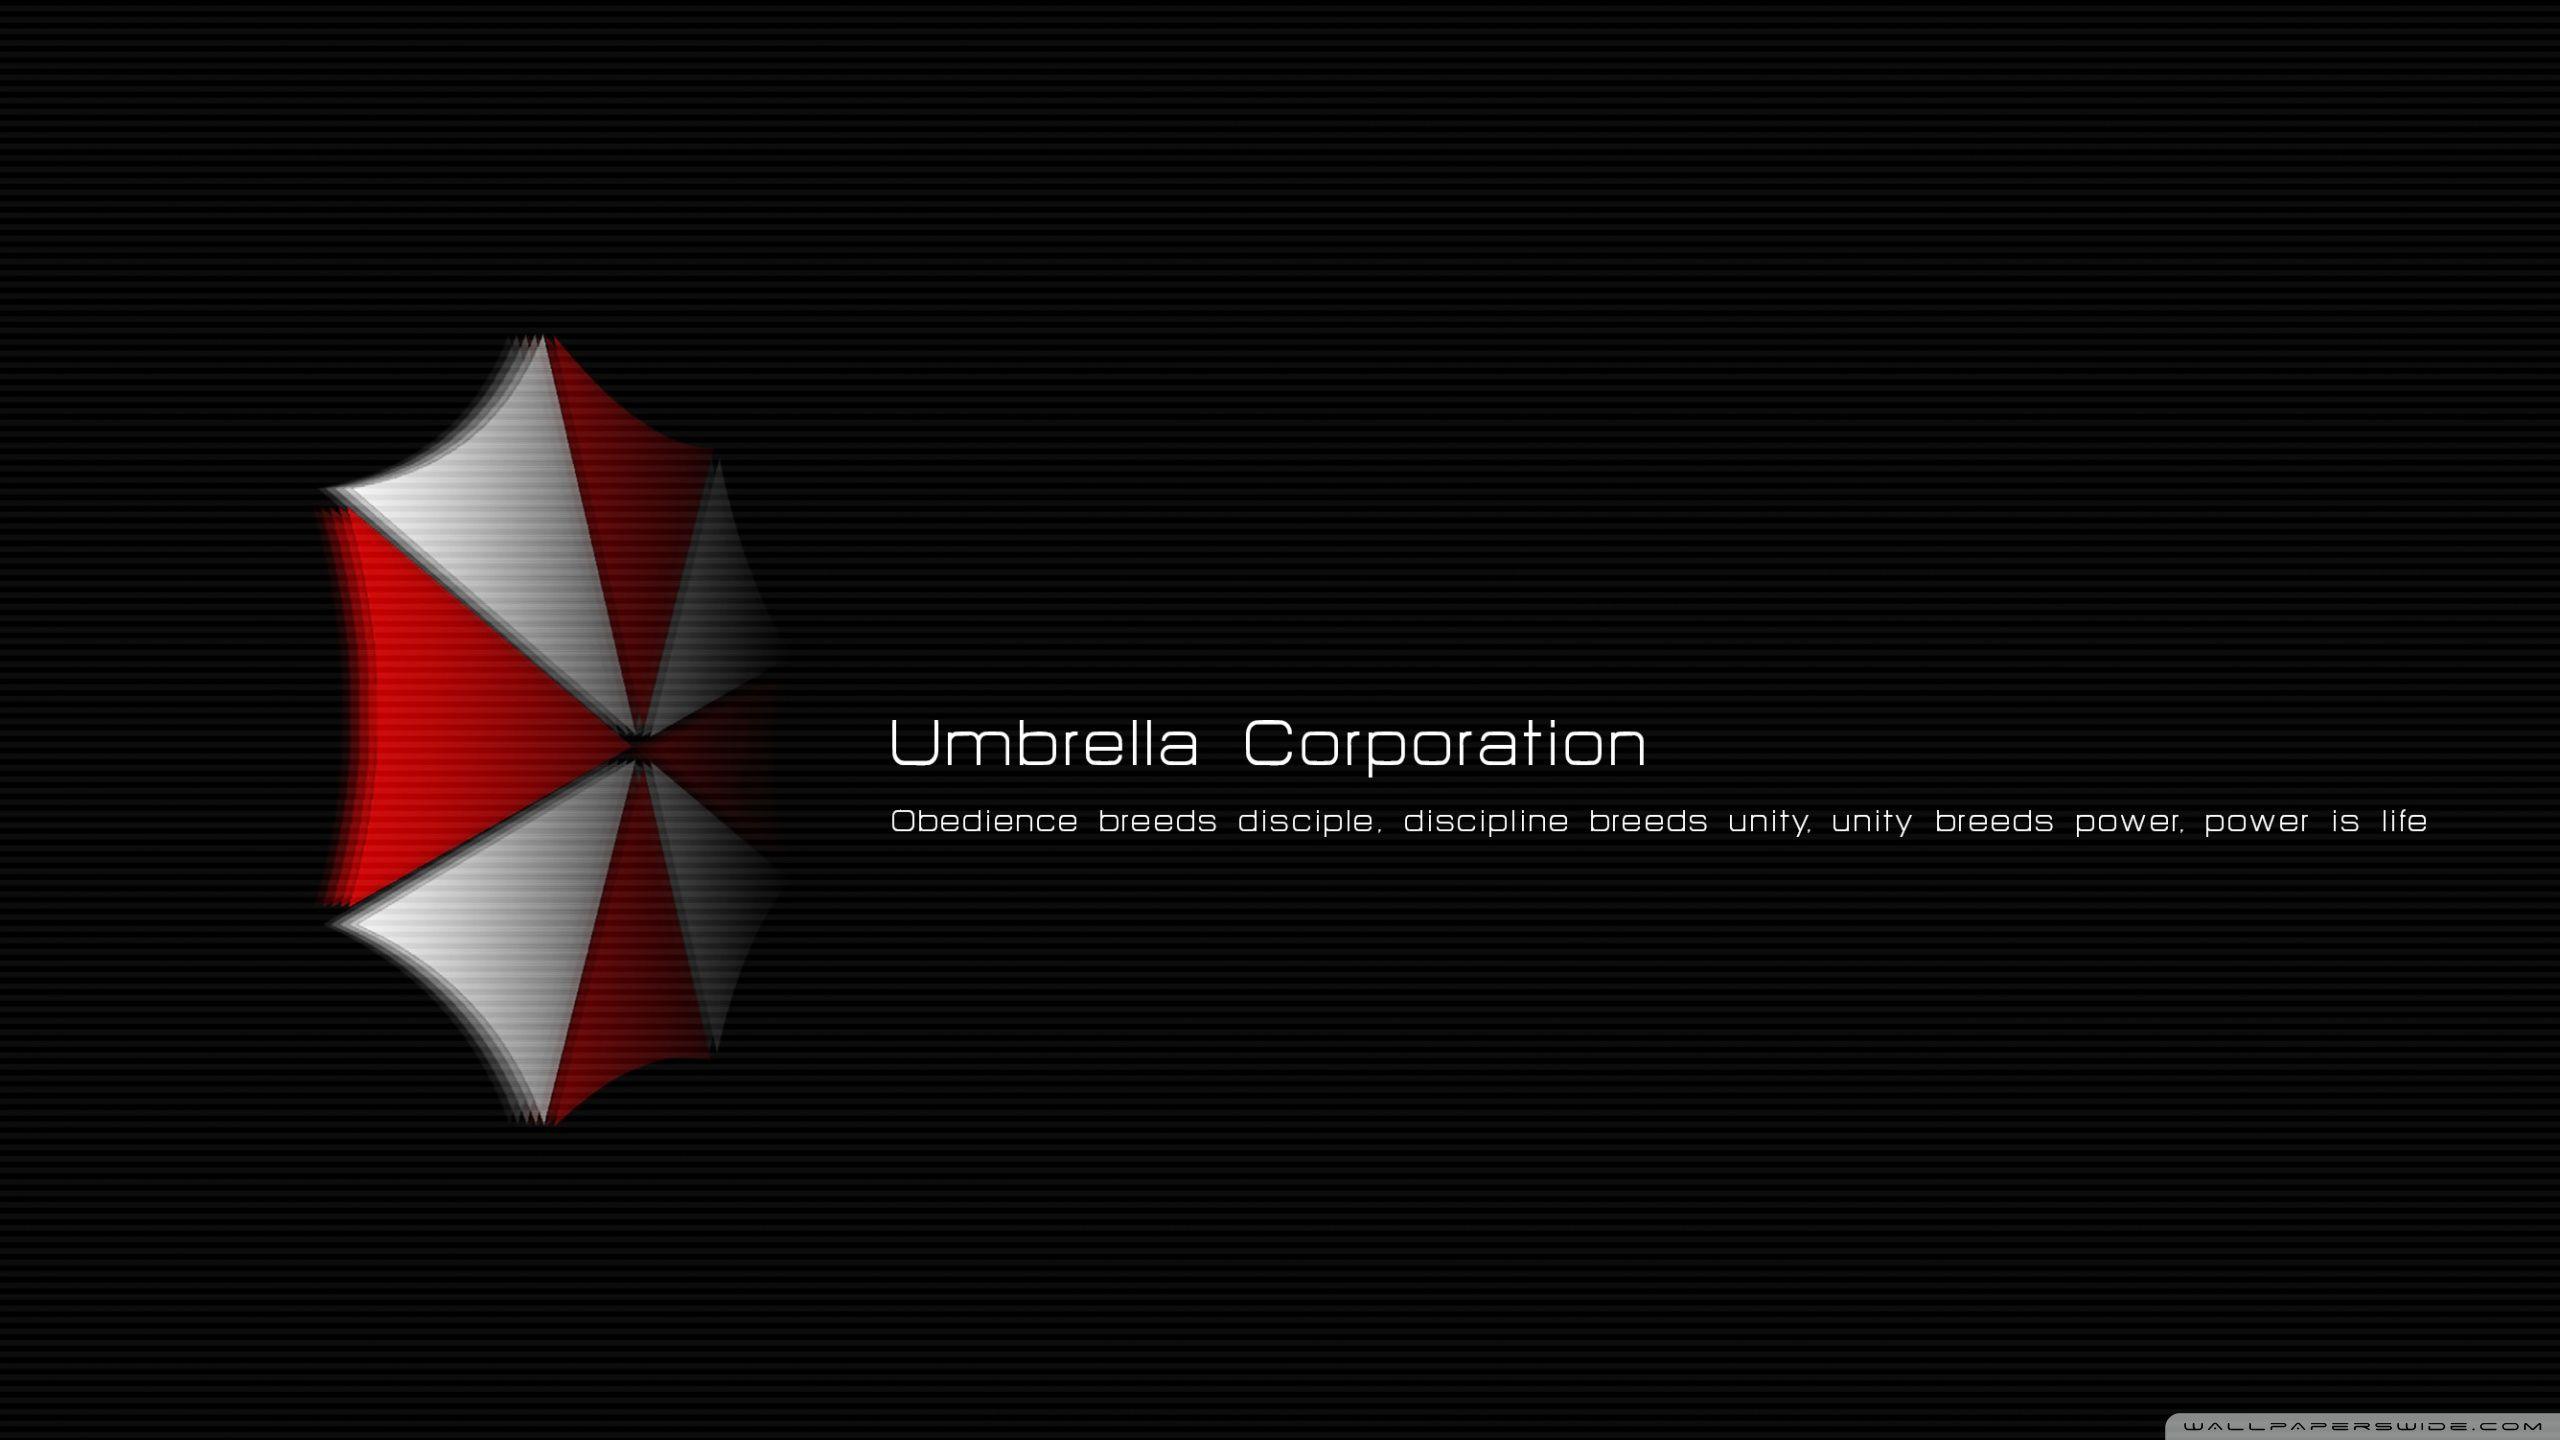 Umbrella Corporation Ultra HD Desktop Background Wallpaper for 4K UHD TV, Widescreen & UltraWide Desktop & Laptop, Multi Display, Dual Monitor, Tablet